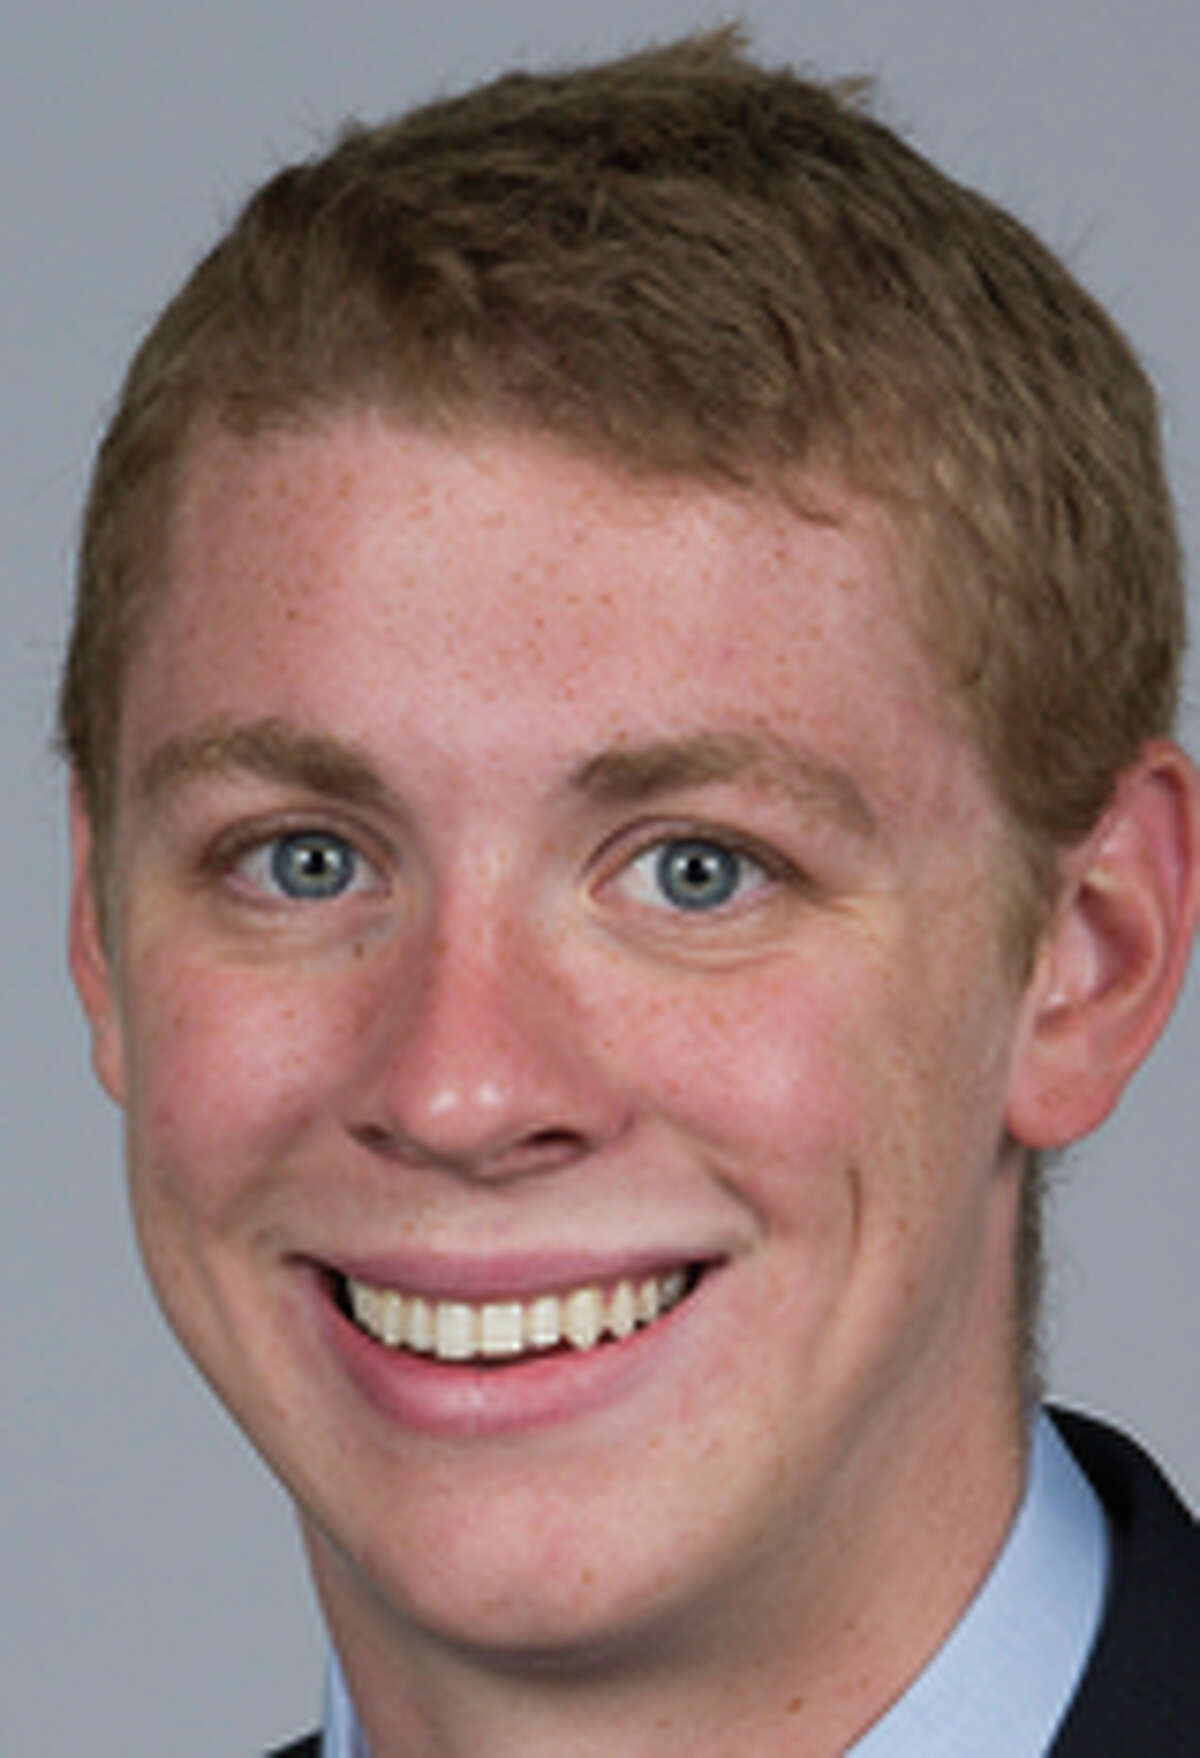 Ex-Stanford student Brock Turner faces rape charges.